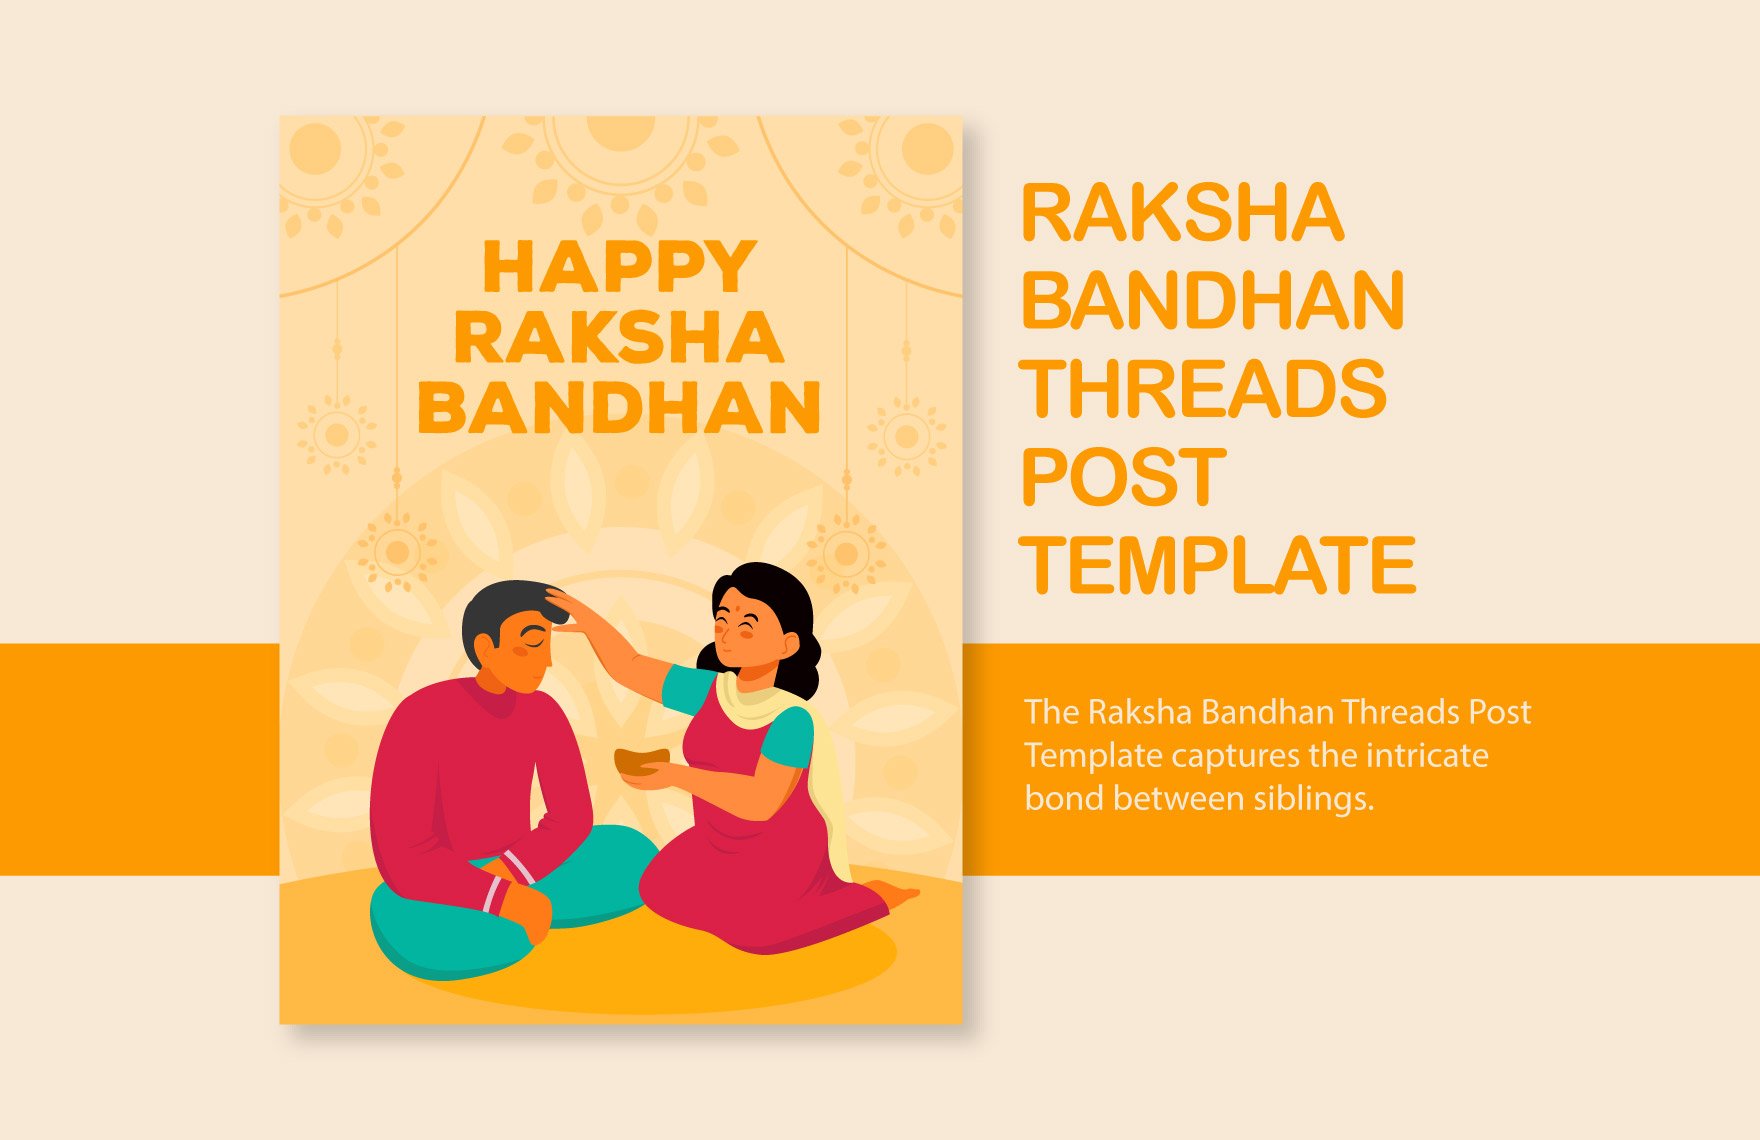 Raksha Bandhan Threads Post Template